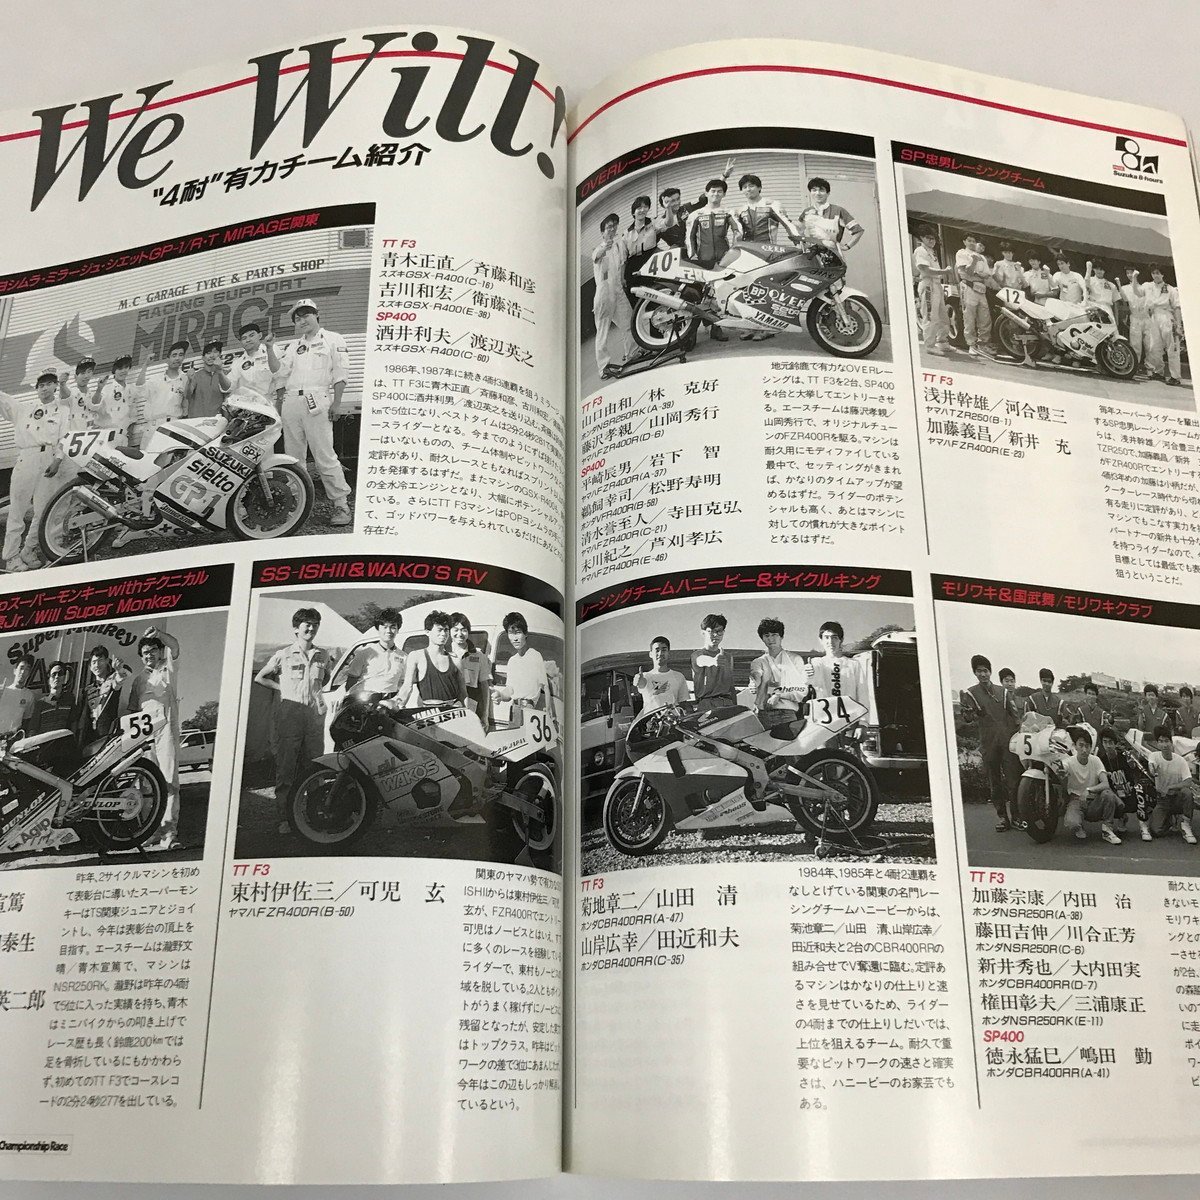 NC/L/Suzuka 8-hours World Endurance Championship Race 公式プログラム2冊セット 1987年、1988年/鈴鹿サーキット/鈴鹿8時間耐久レース_画像6